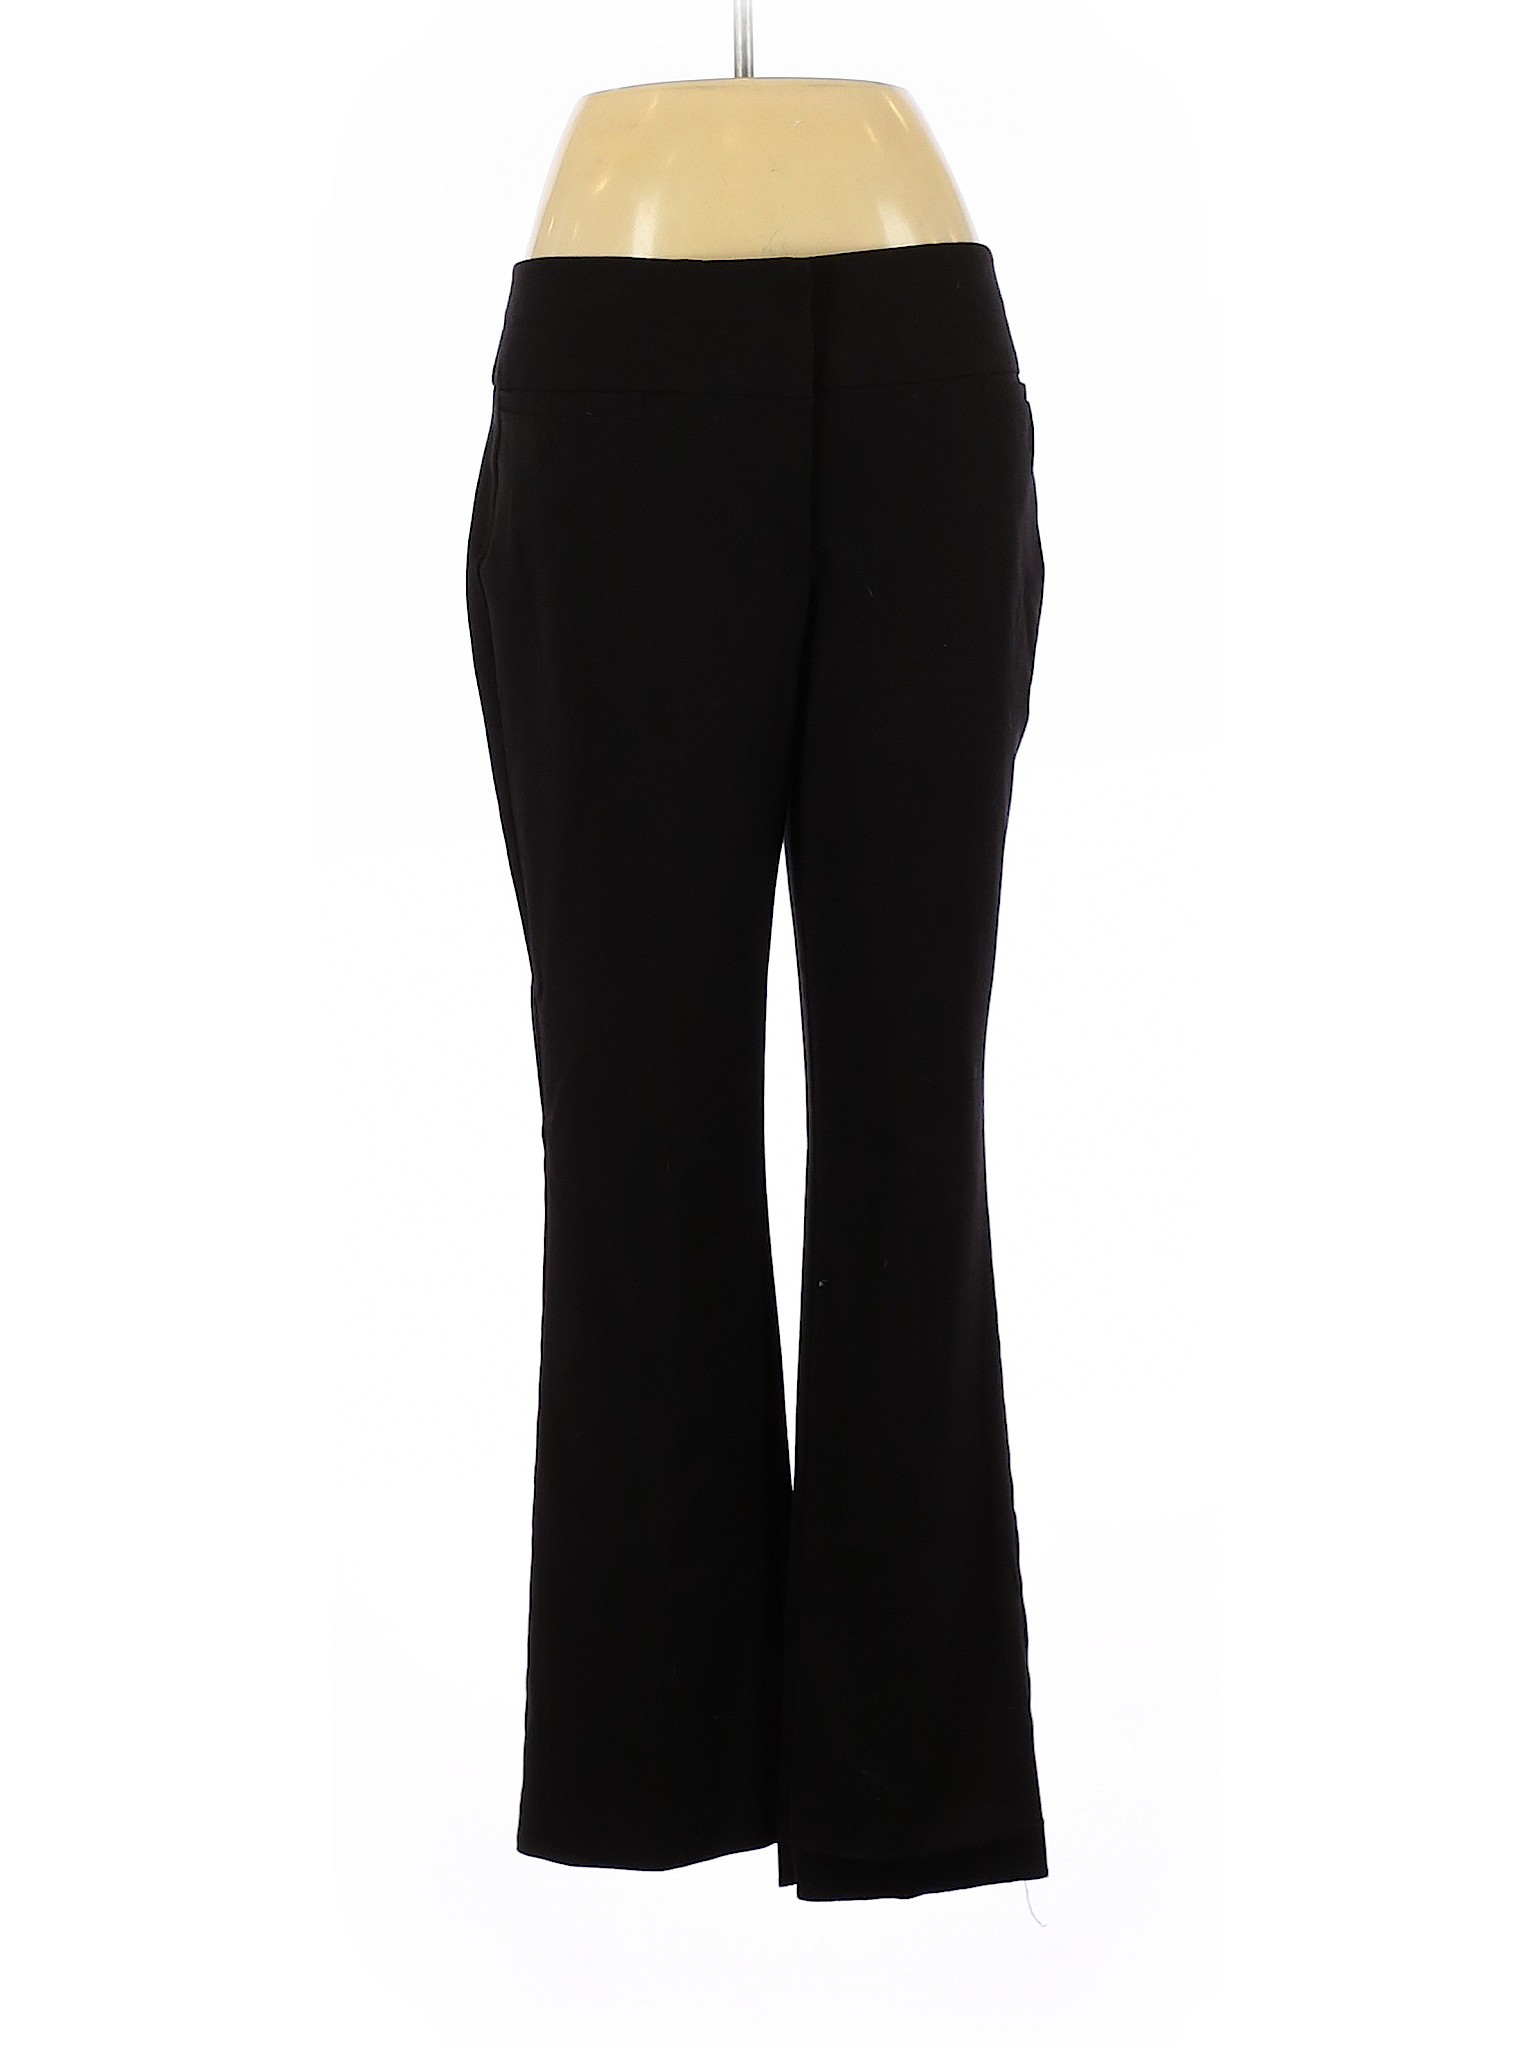 Maurices Women Black Dress Pants 6 | eBay